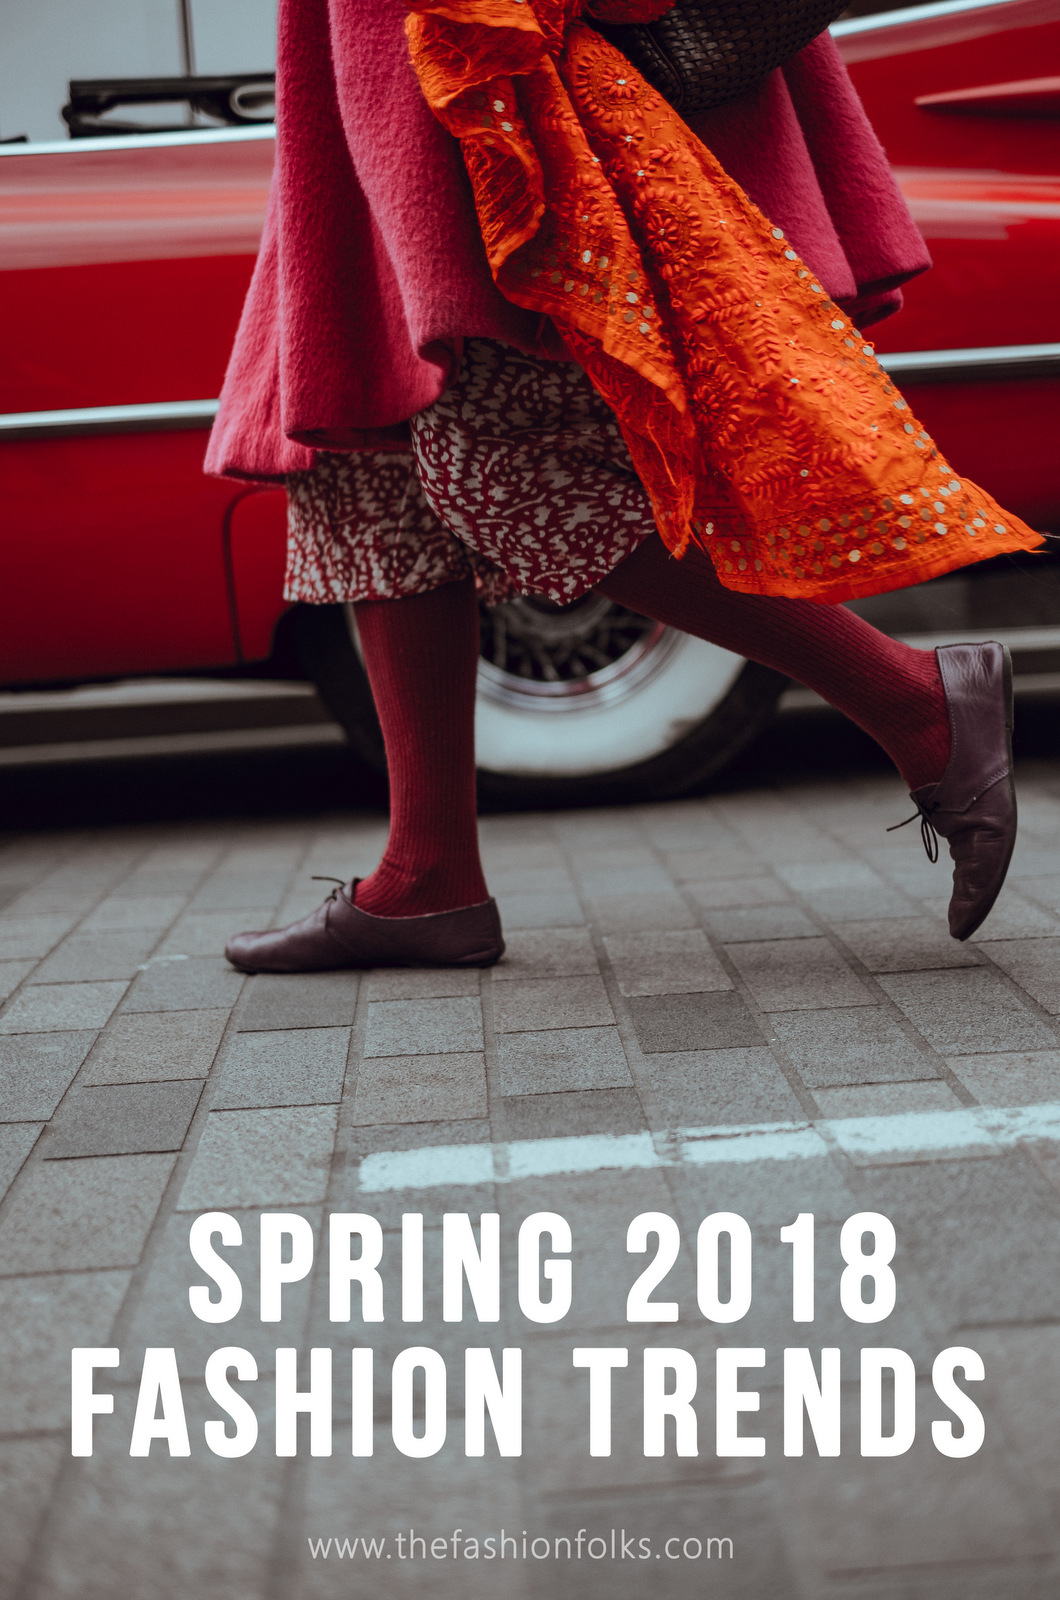 Fashion Trends Spring 2018 - The Fashion Folks